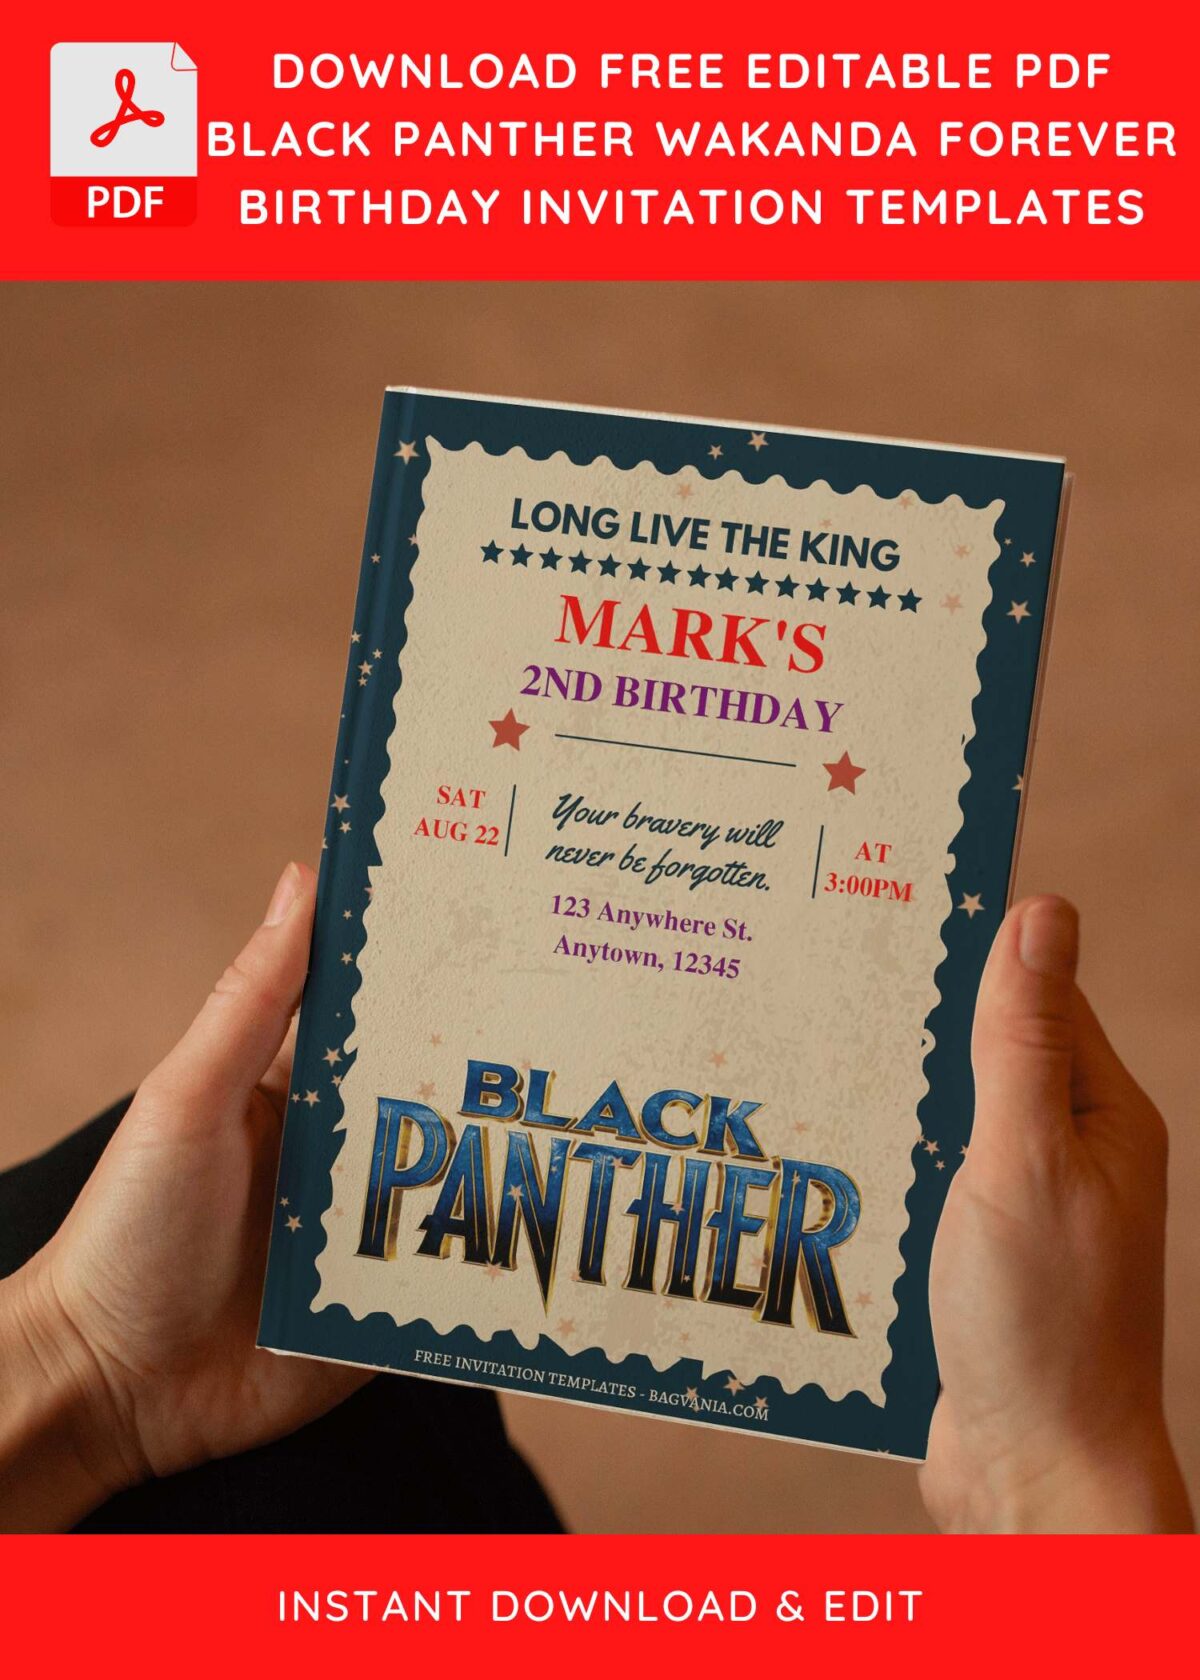 (Free Editable PDF) Marvel Black Panther Birthday Invitation Templates E